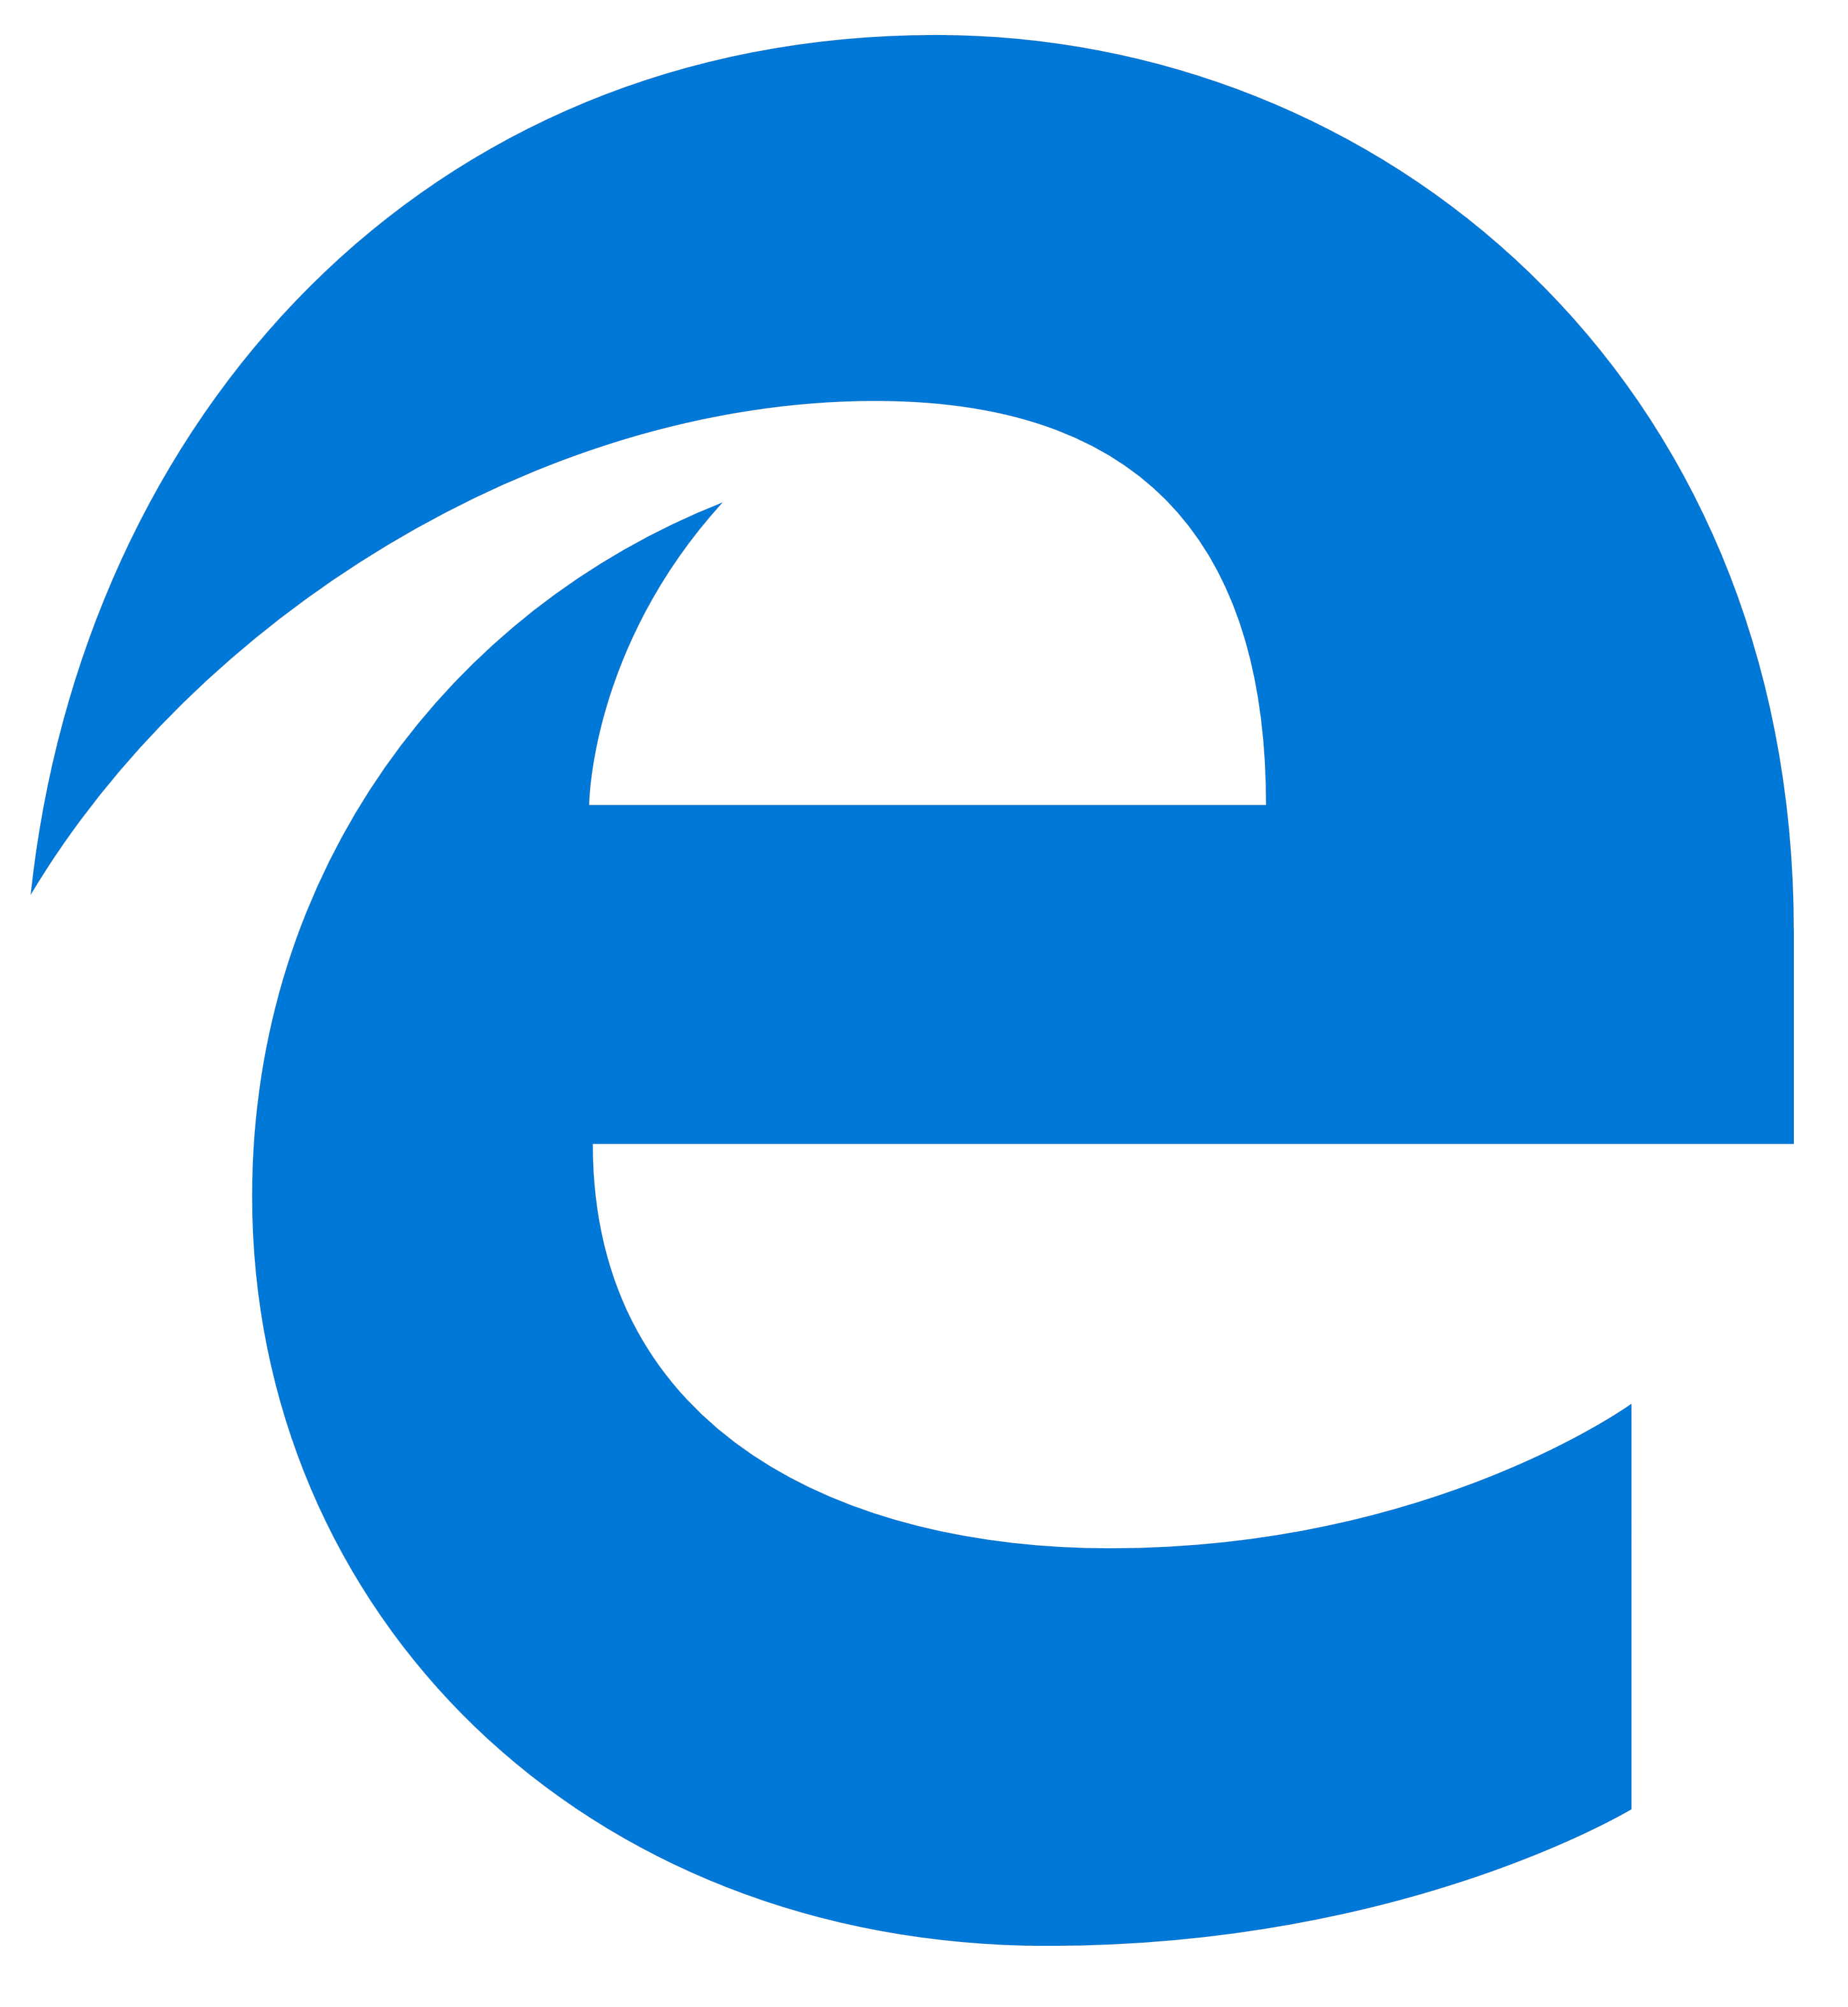 Microsoft Edge logo, logotype